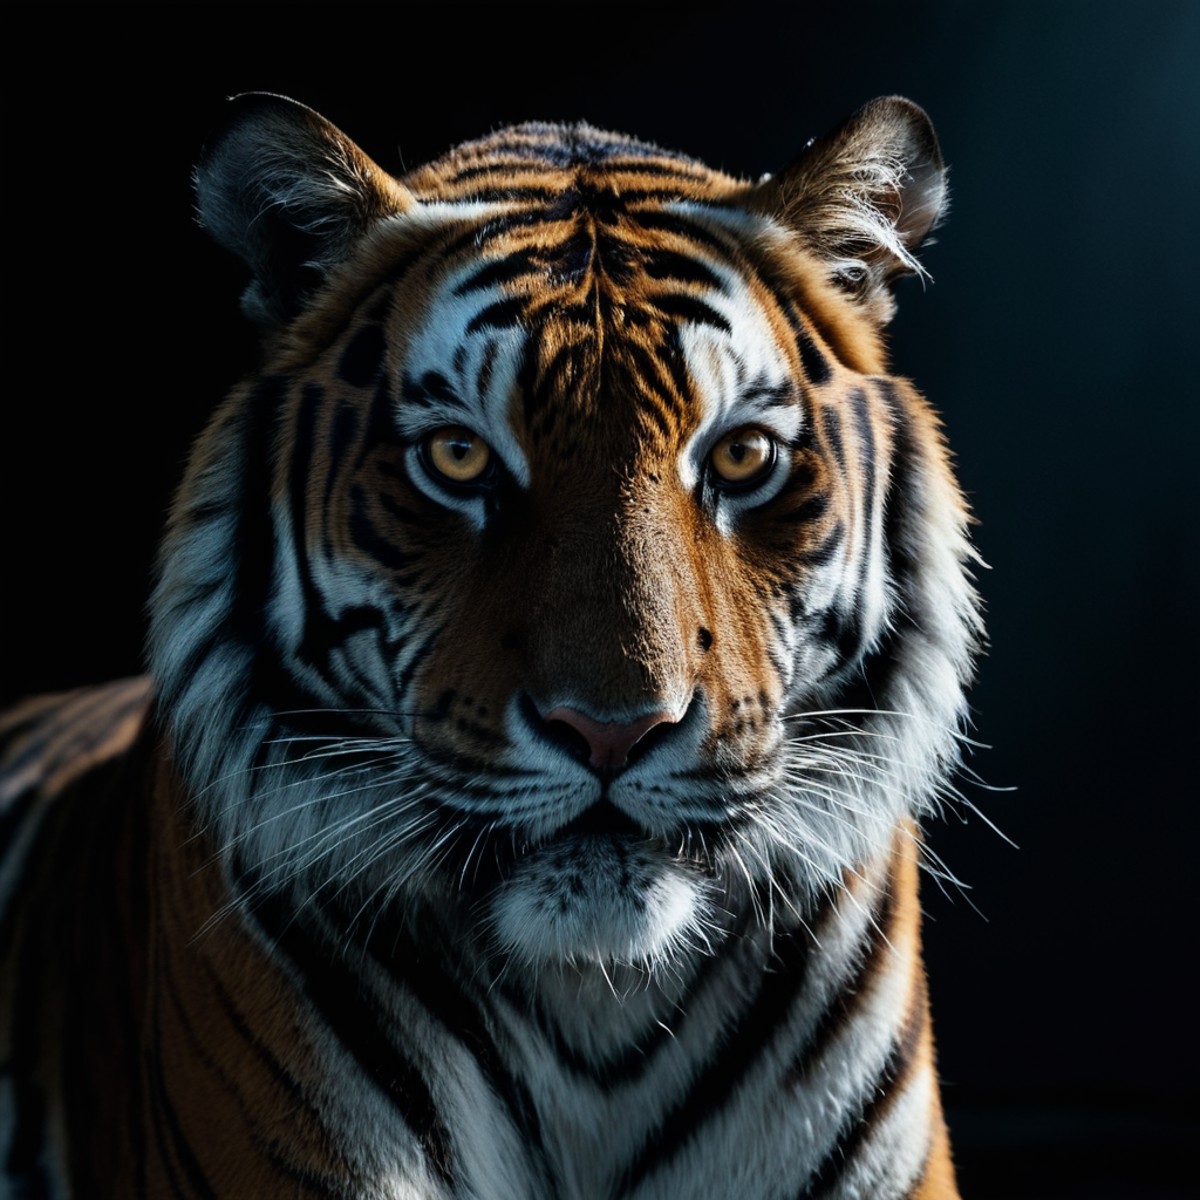 cinematic film still of  <lora:Split Lighting Photography style:1>
Split Lighting Photography of a tiger in a dark room pa...